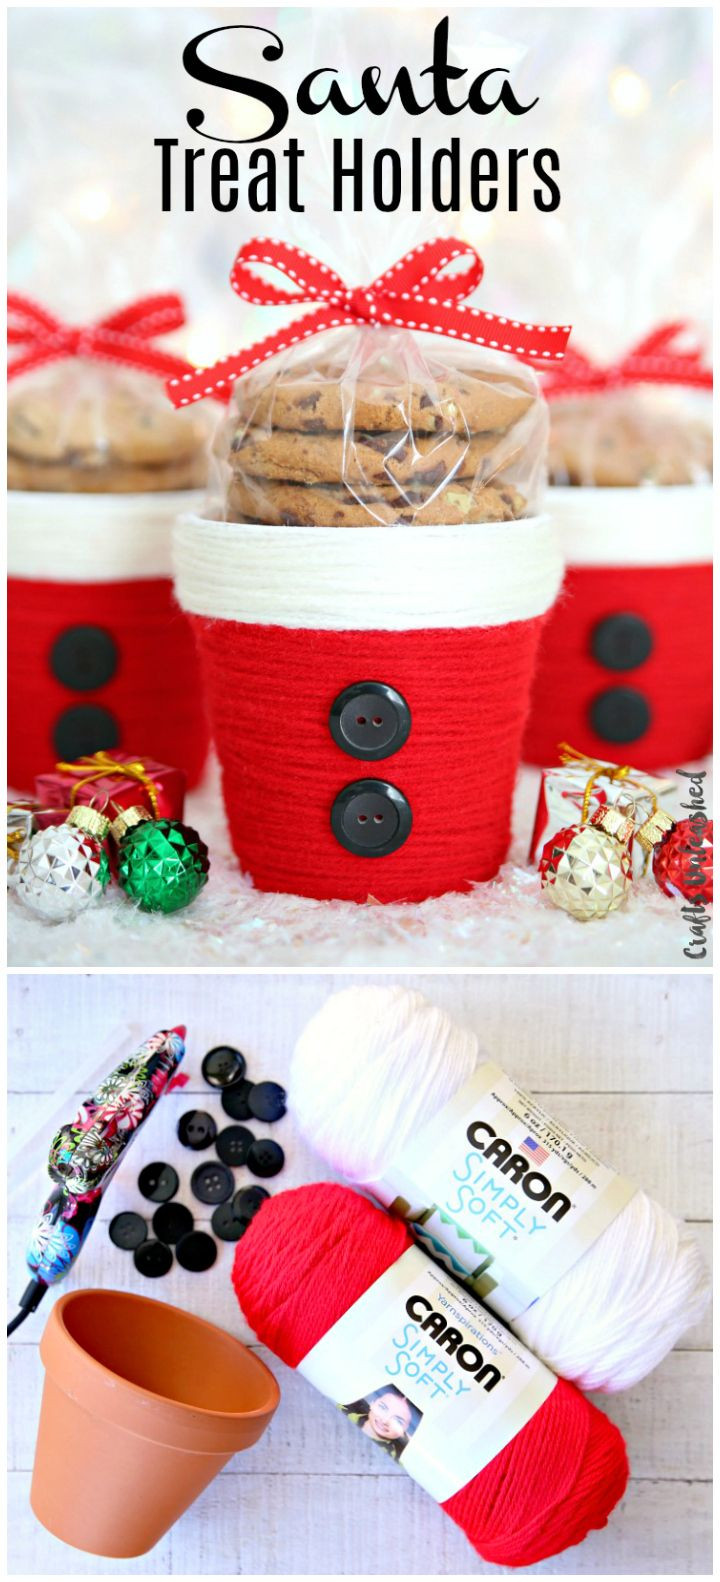 Best ideas about DIY Secret Santa Gifts
. Save or Pin Best 25 Secret santa ts ideas on Pinterest Now.